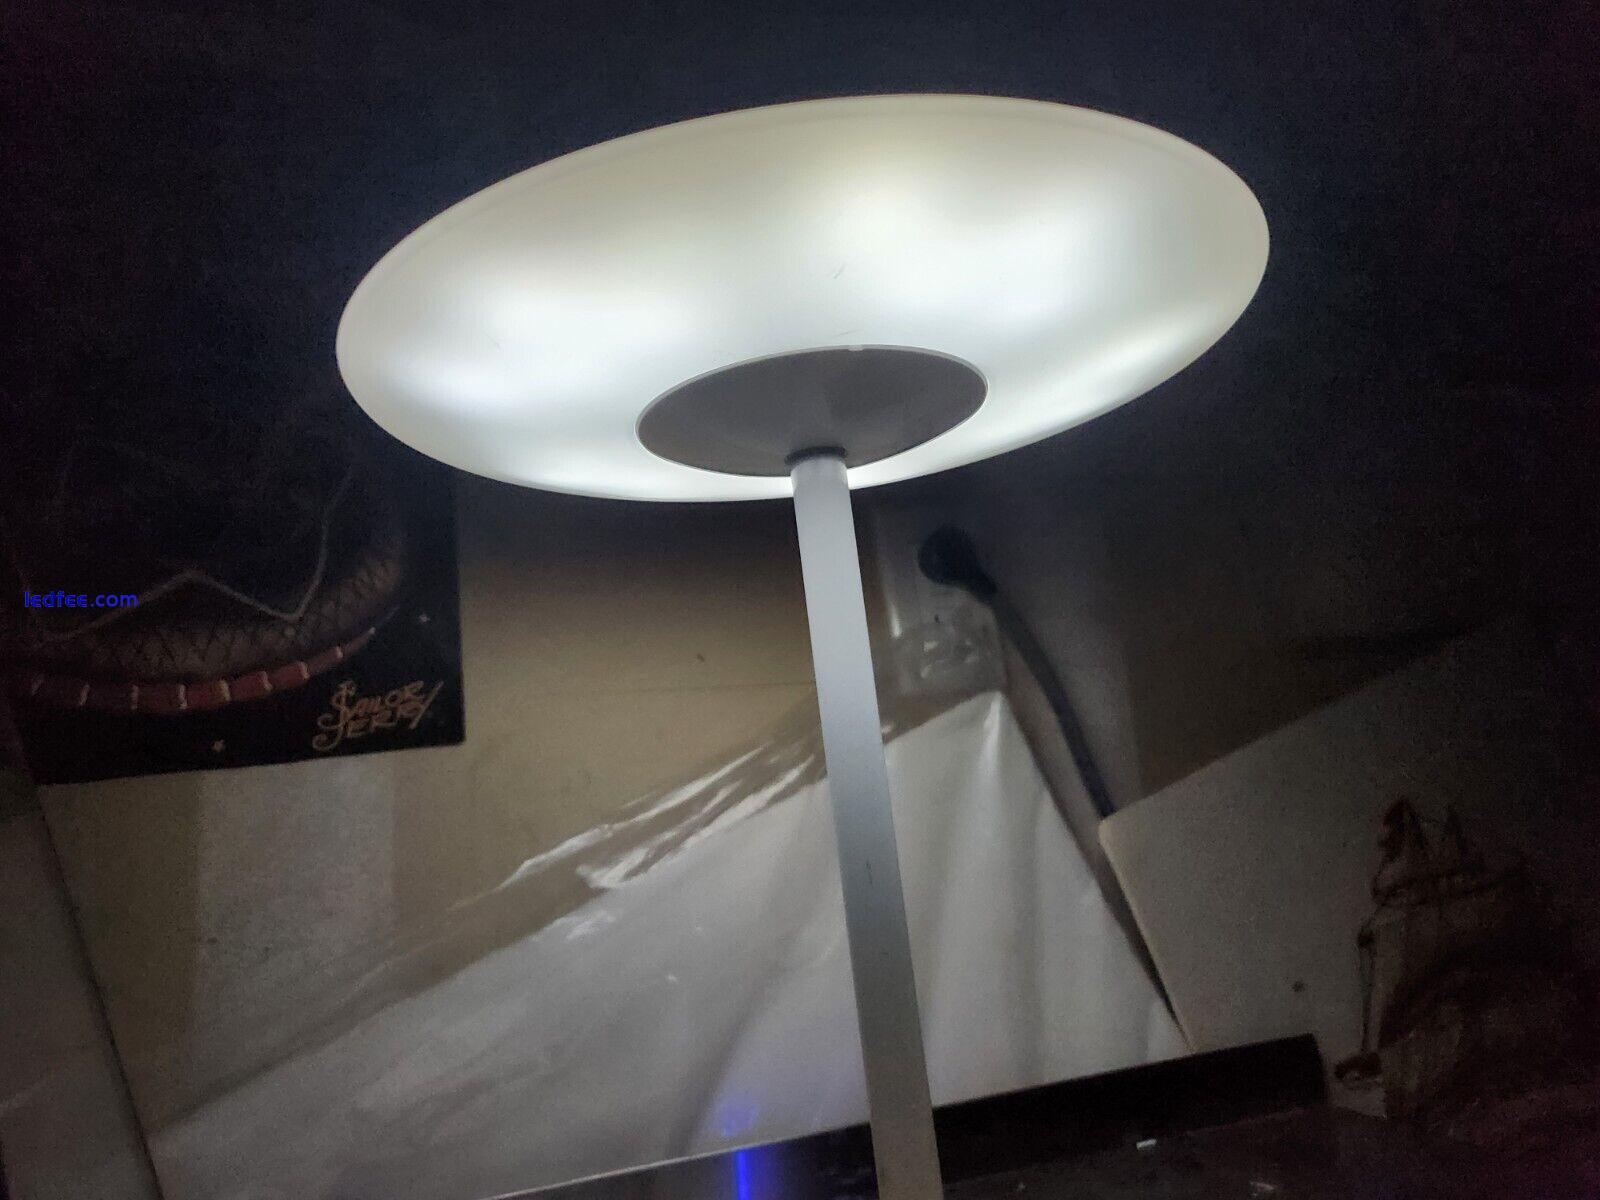 Ultrabrite Led Desk Lamp Mood and Night Light Qi Wireless Charging Needs Cord 3 